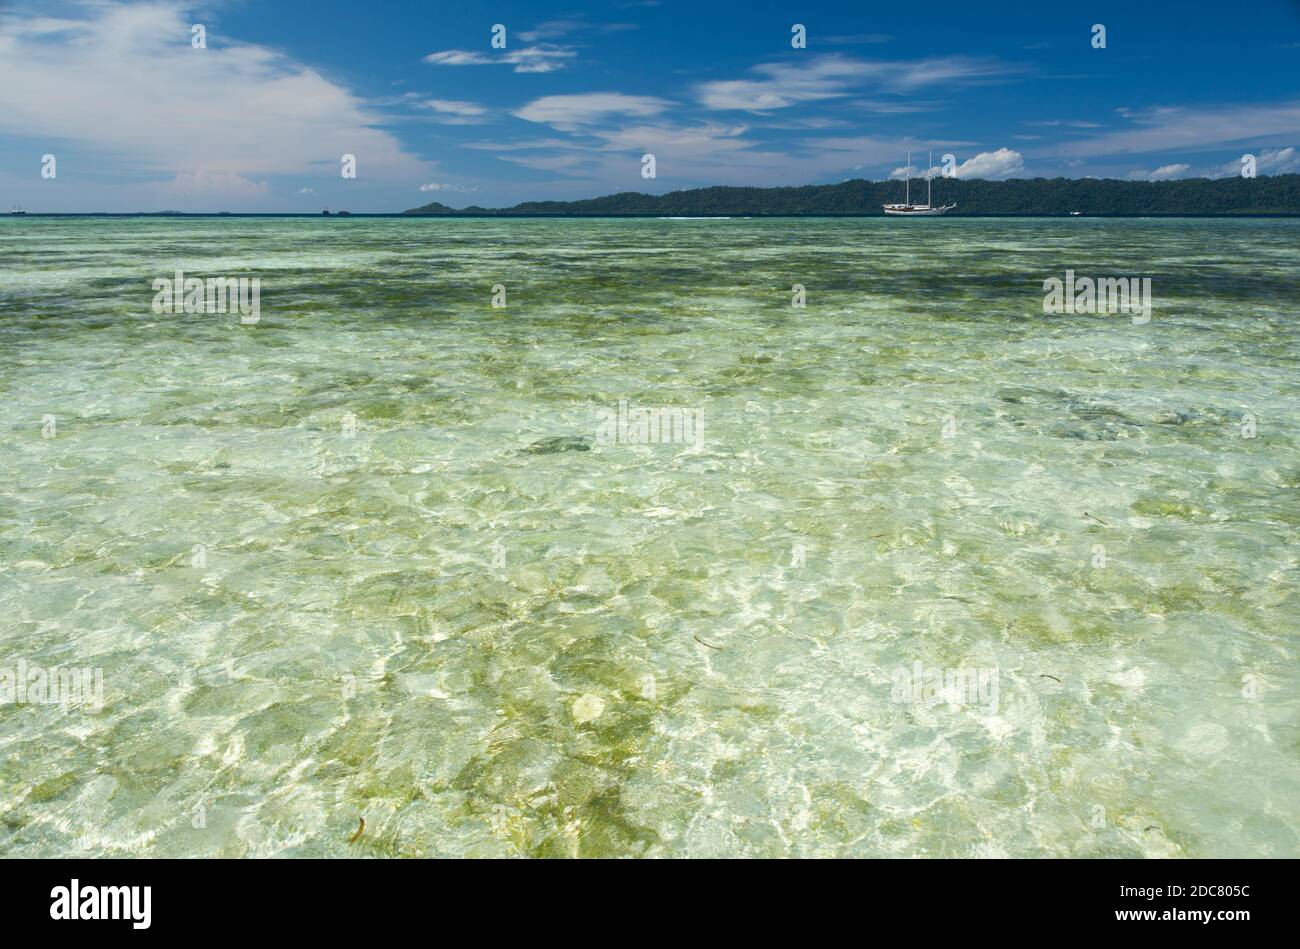 Shallow waters around the island Arborek, Raja Ampat, West Papua, Indonesia Stock Photo